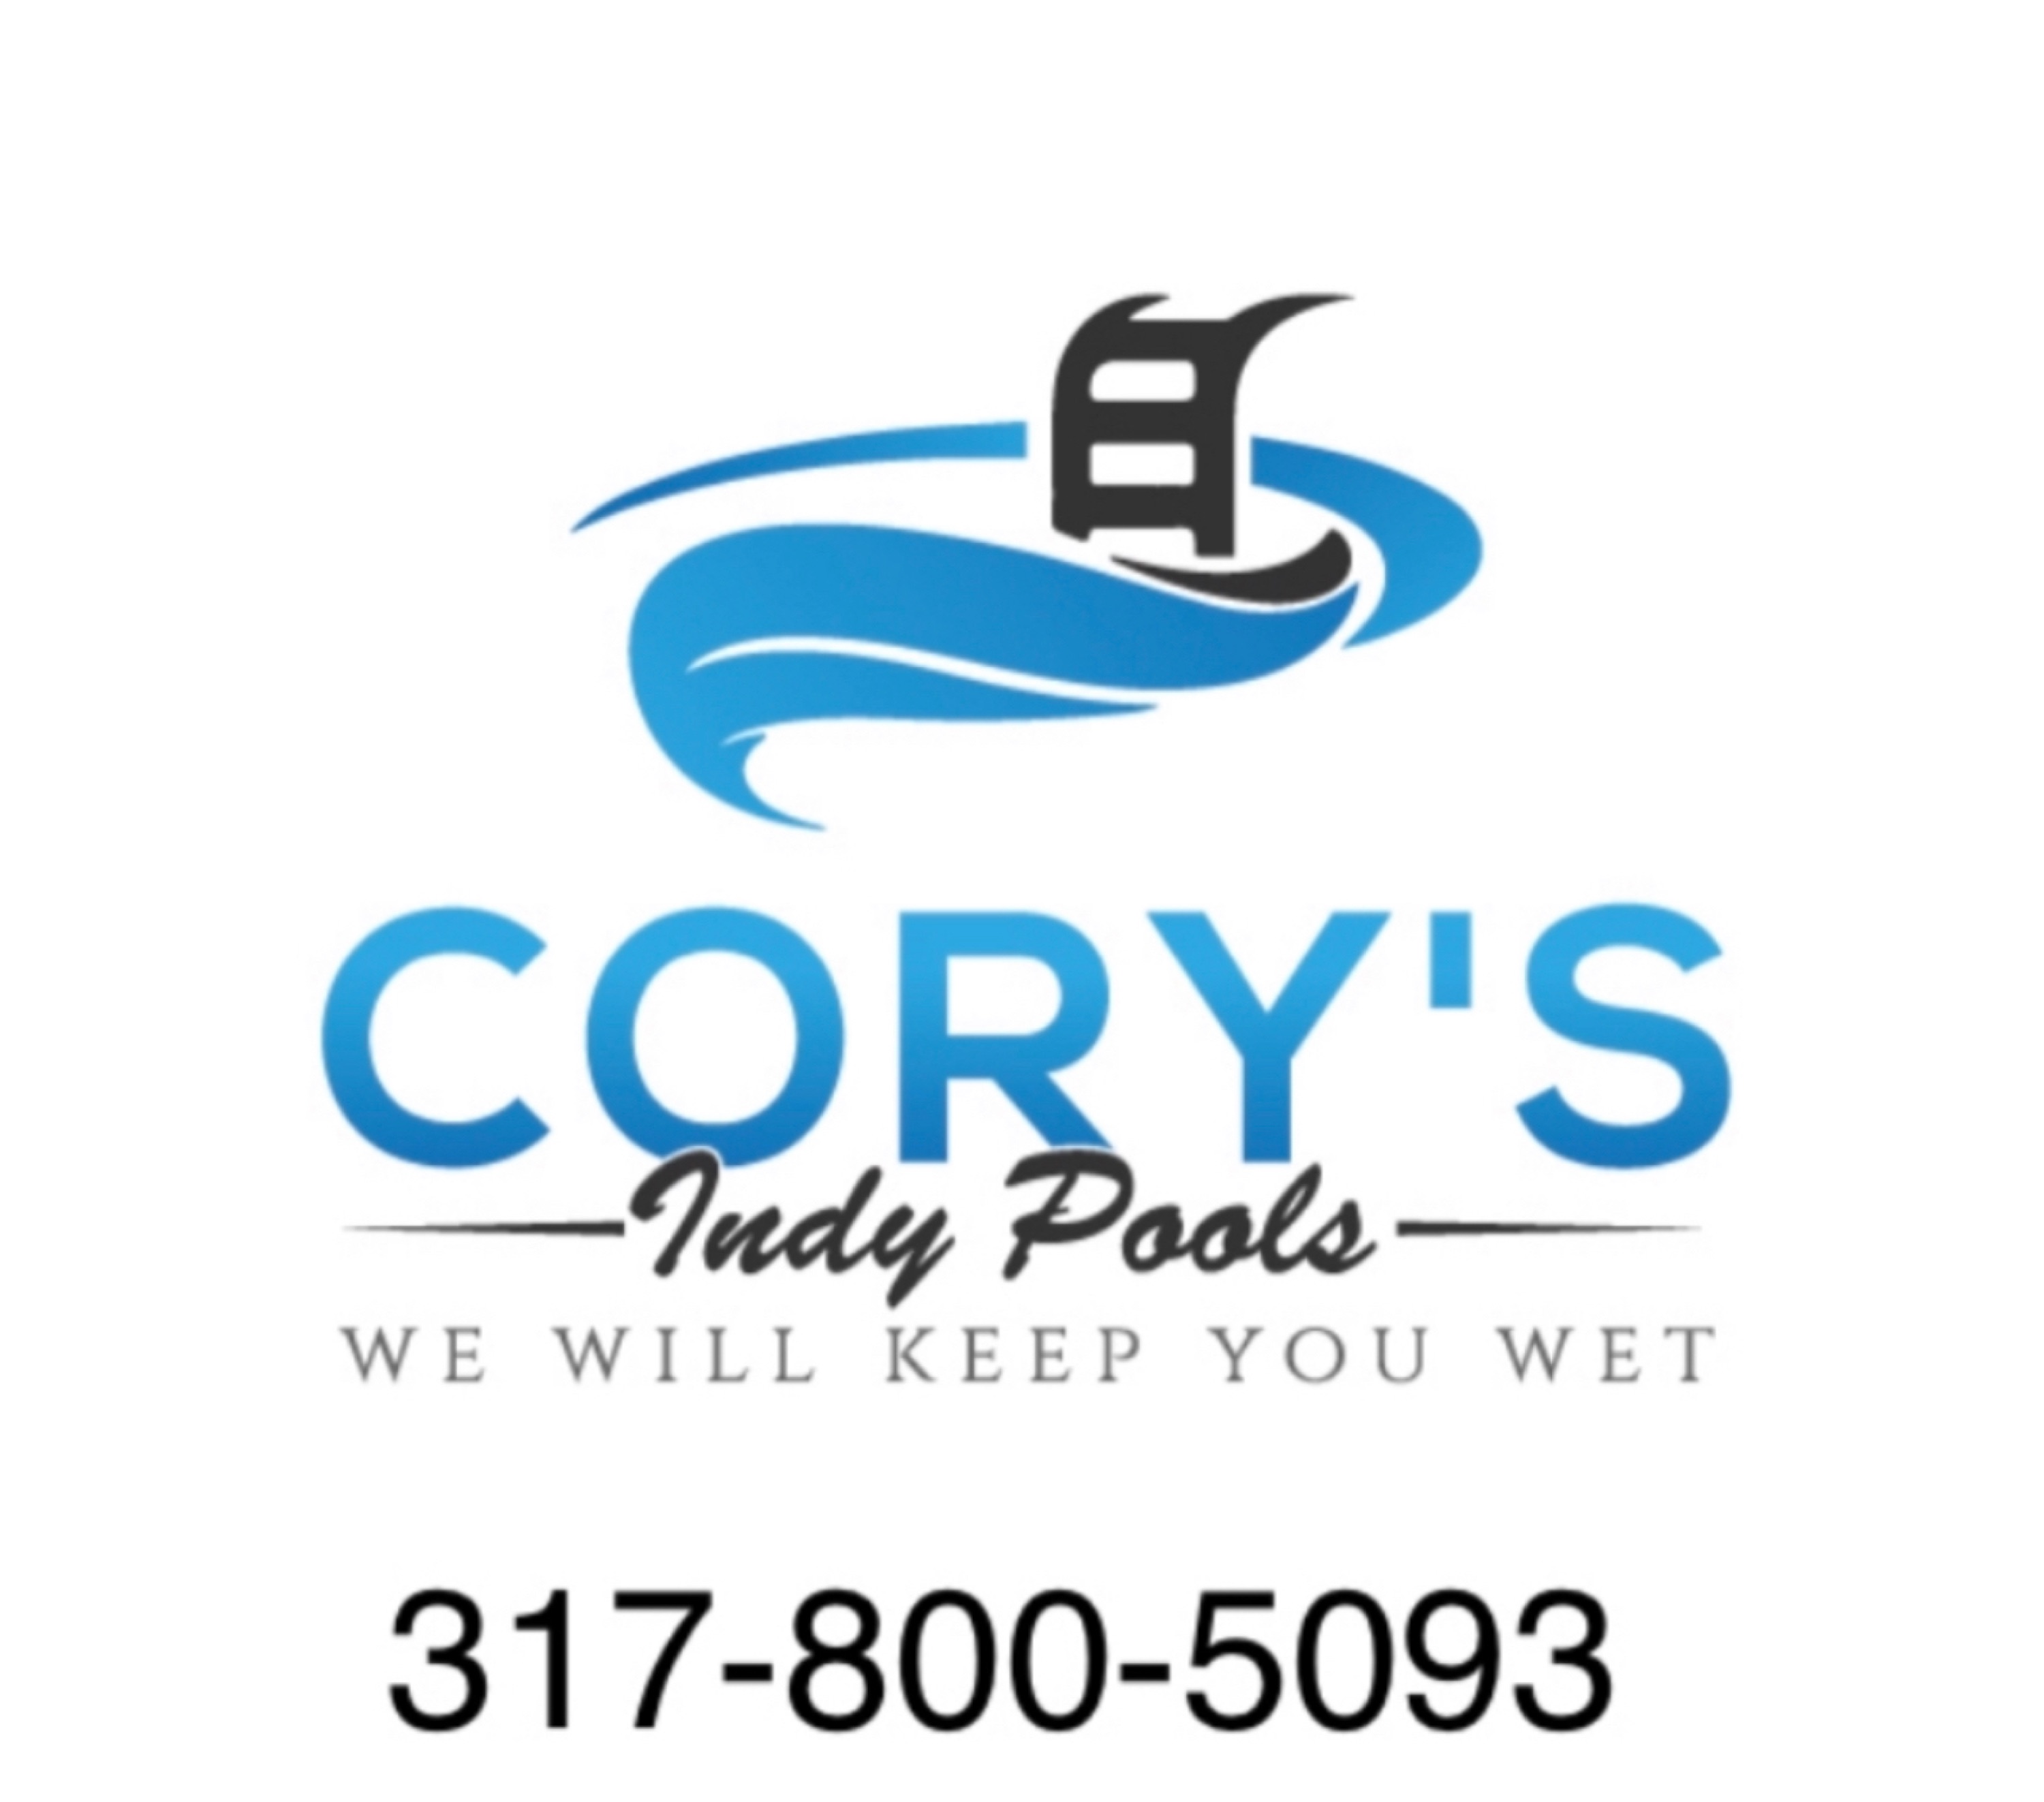 Cory's Indy Pools Logo